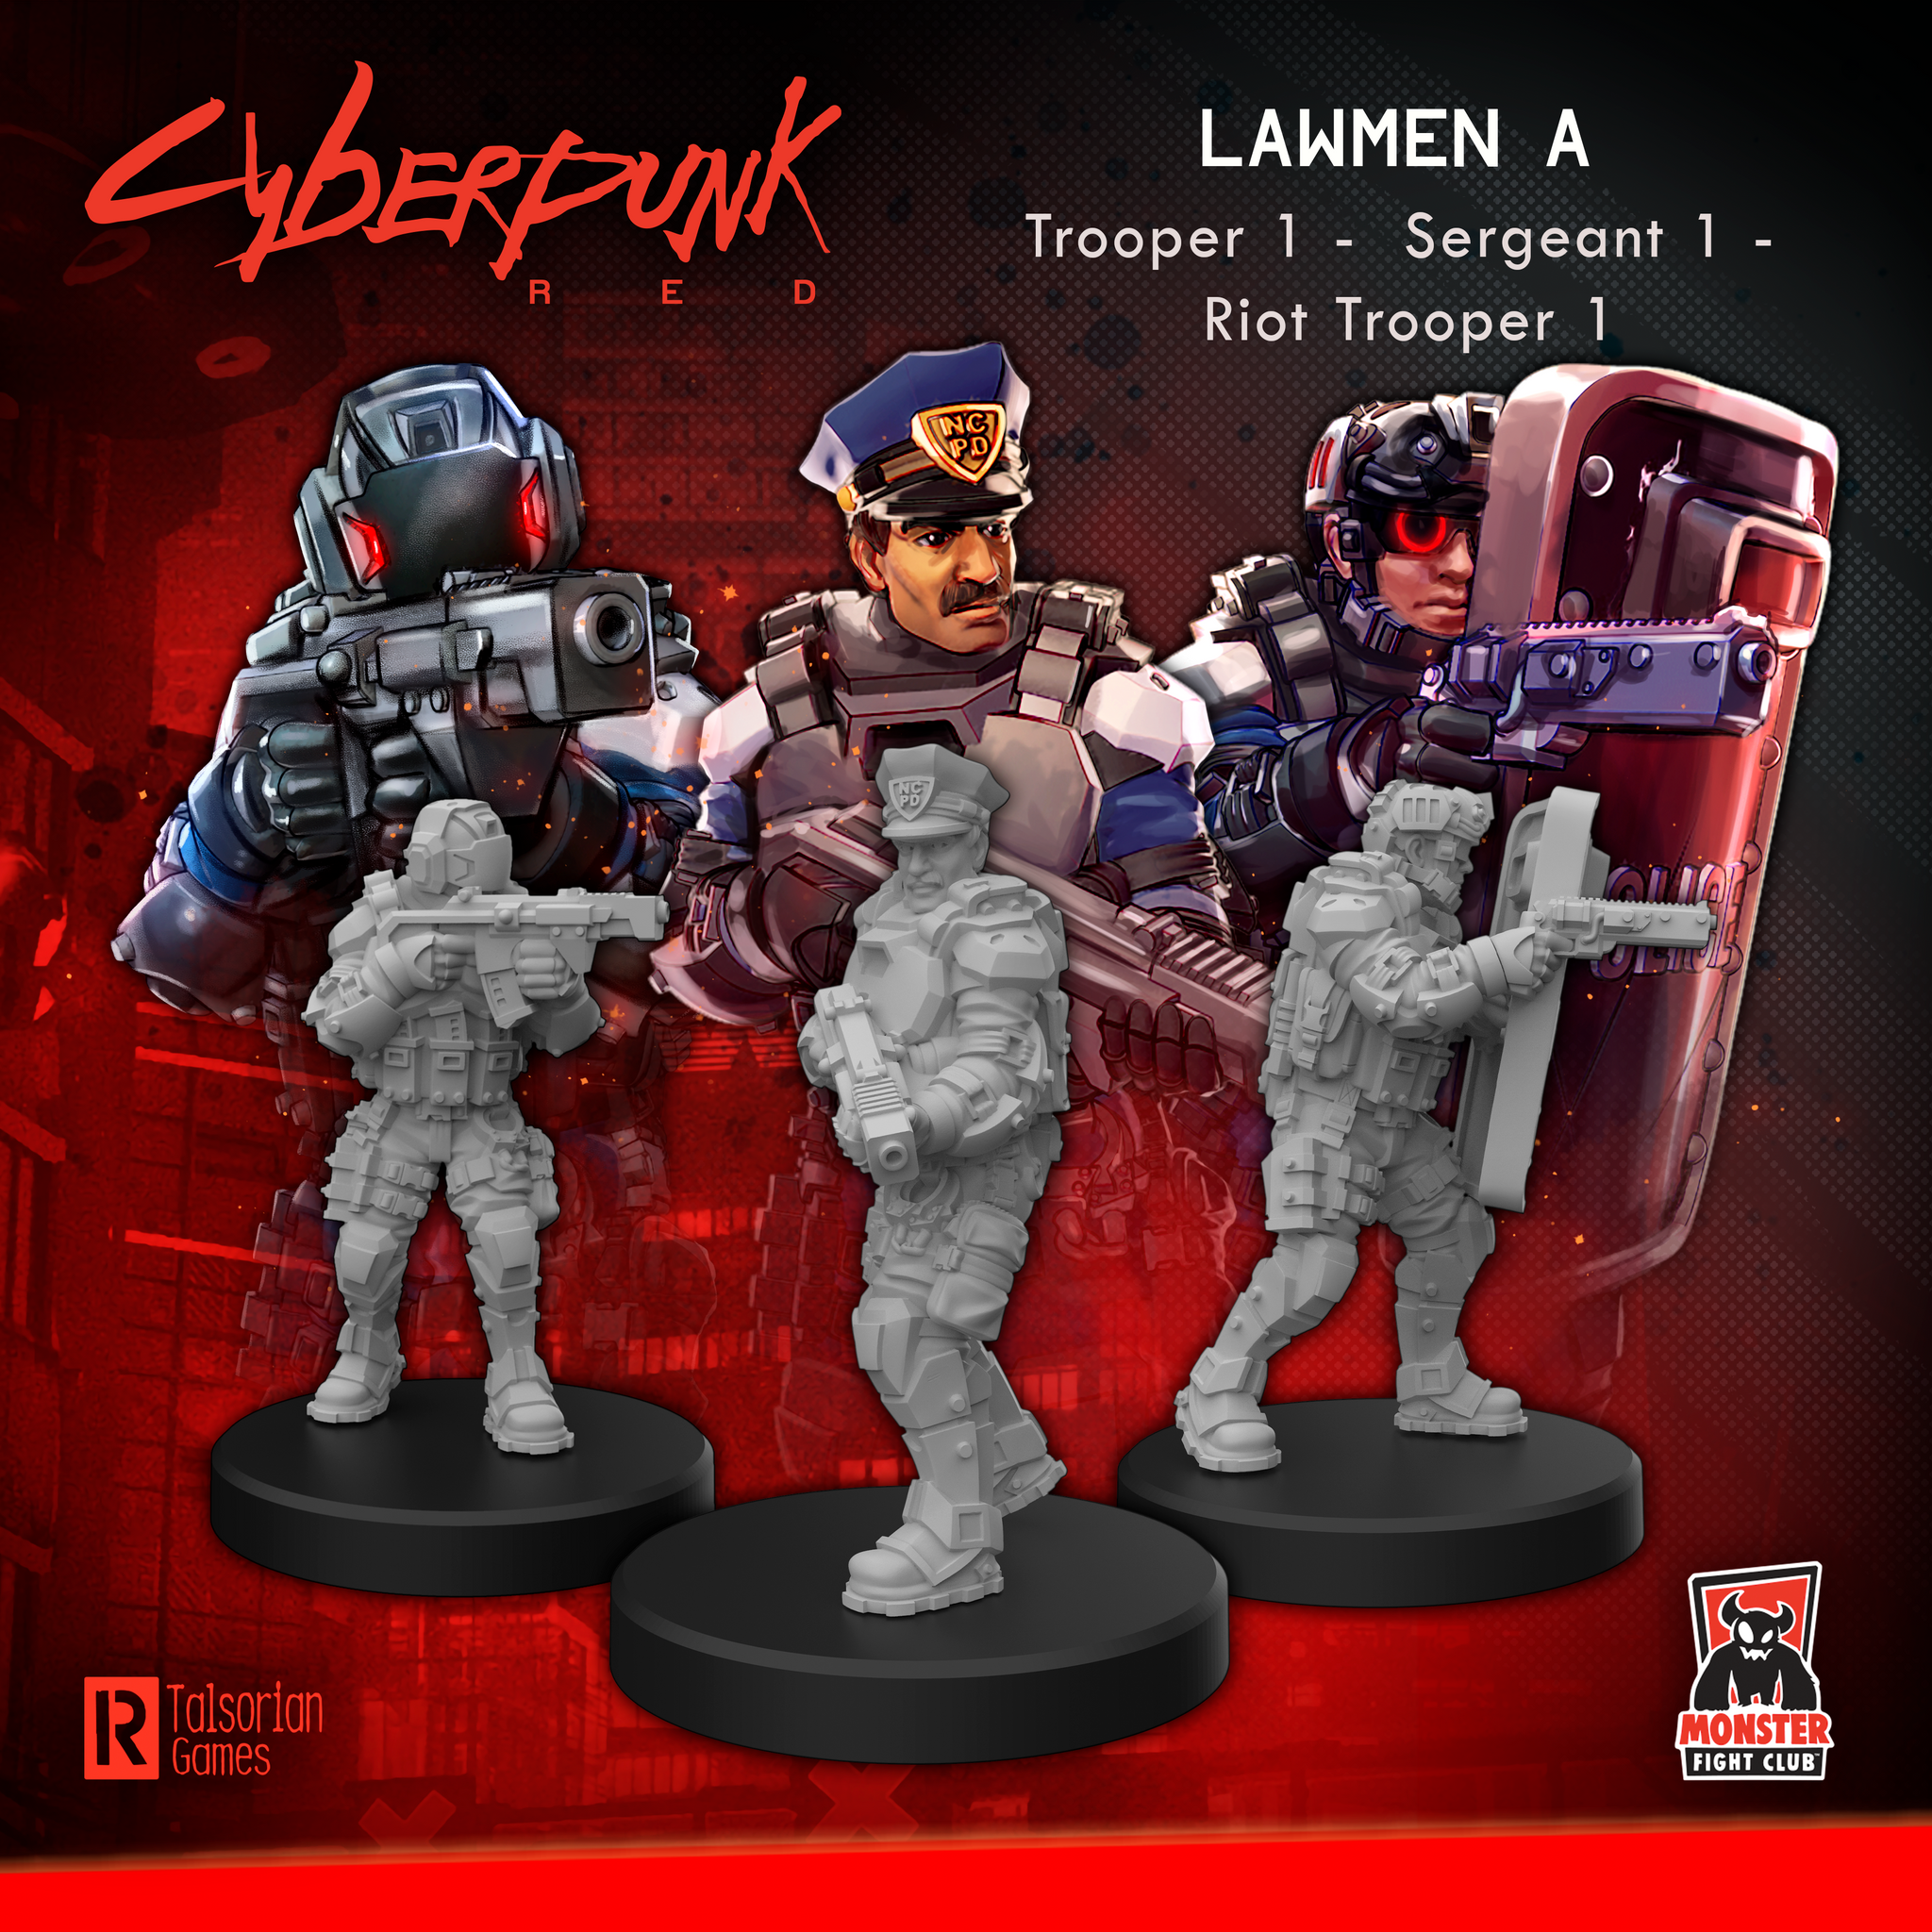 Cyberpunk RED - Lawmen A